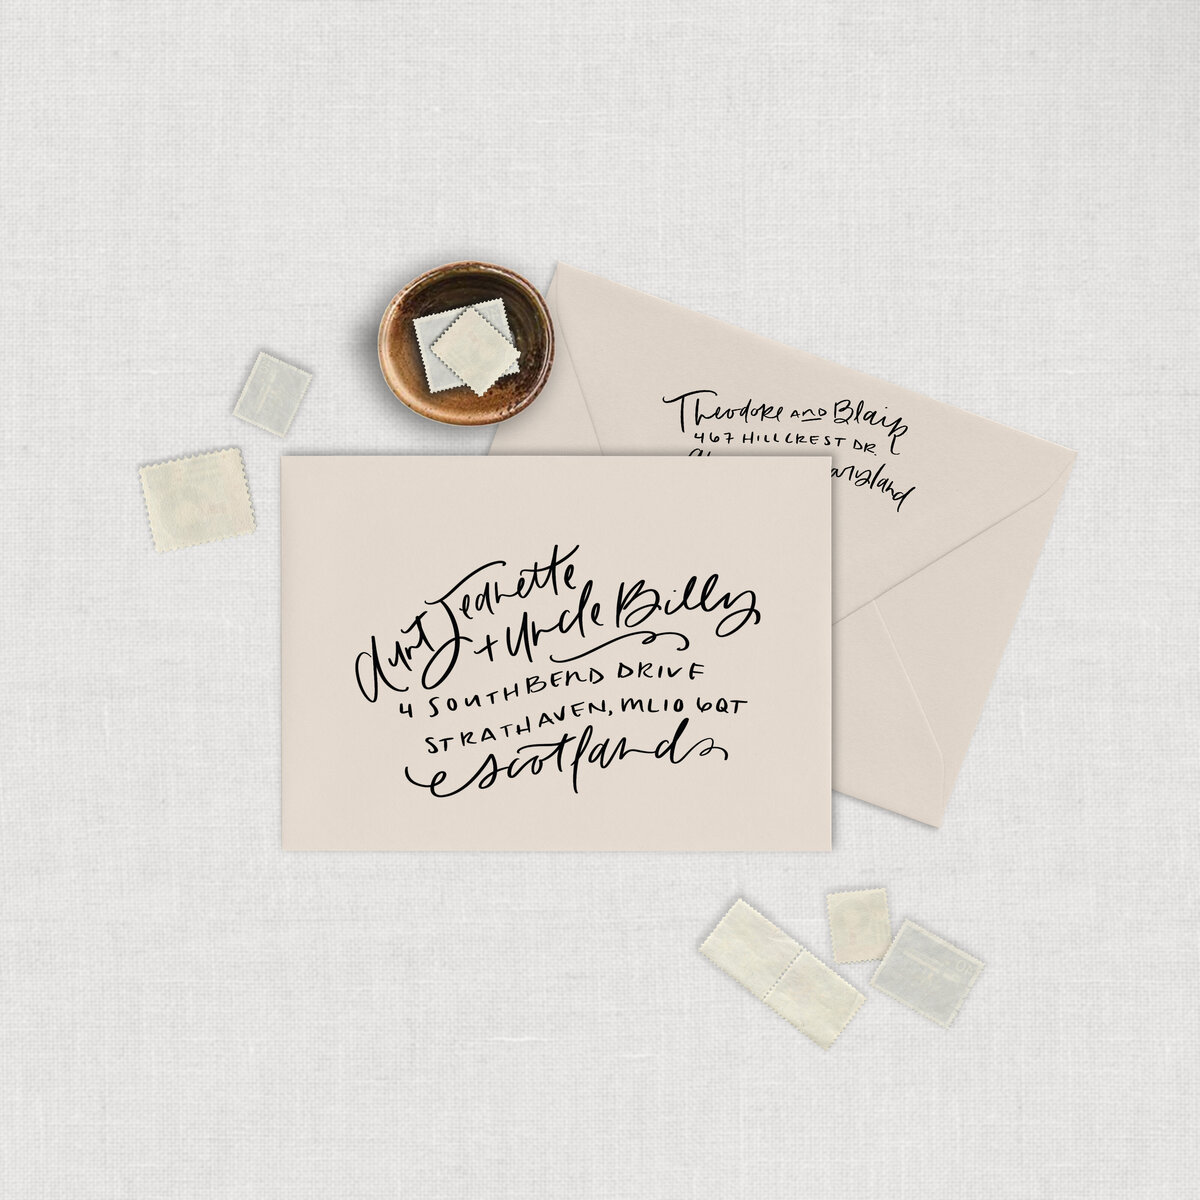 Handwritten calligraphy wedding invitation envelope.